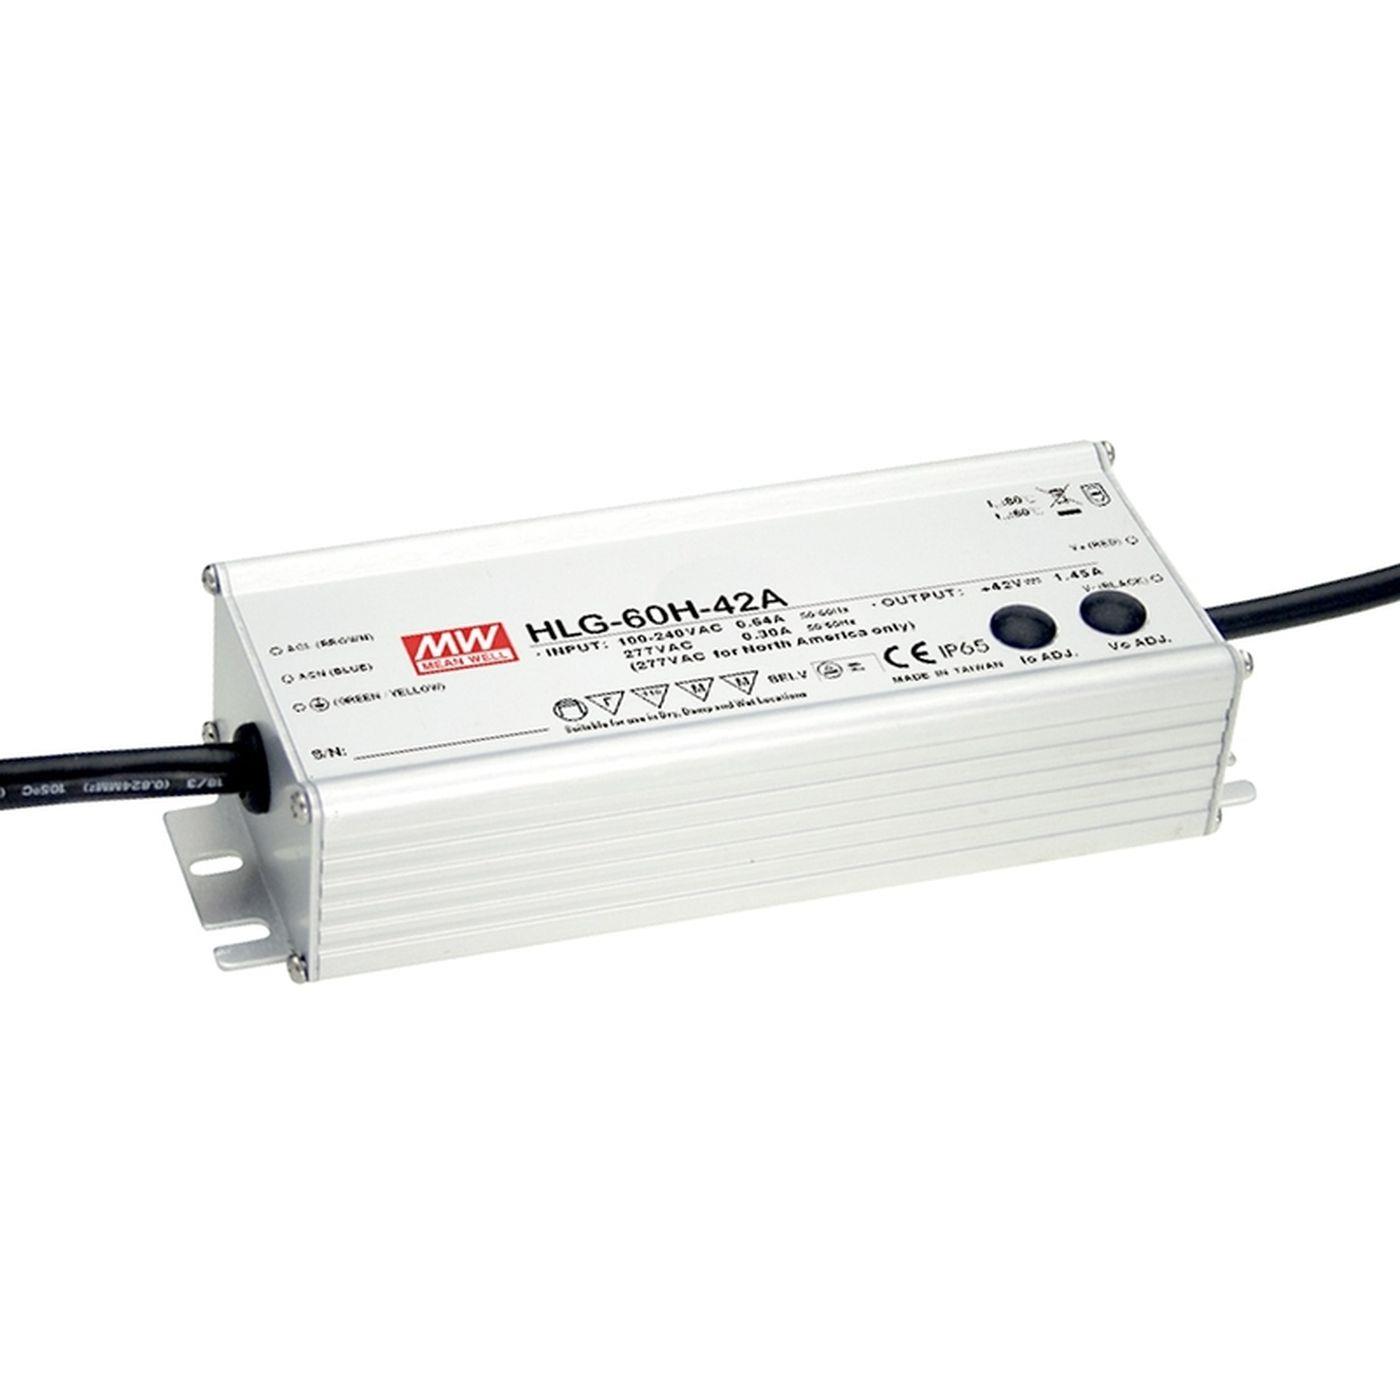 HLG-60H-36A 61W 36V 1,7A LED power supply Transformer Driver IP65